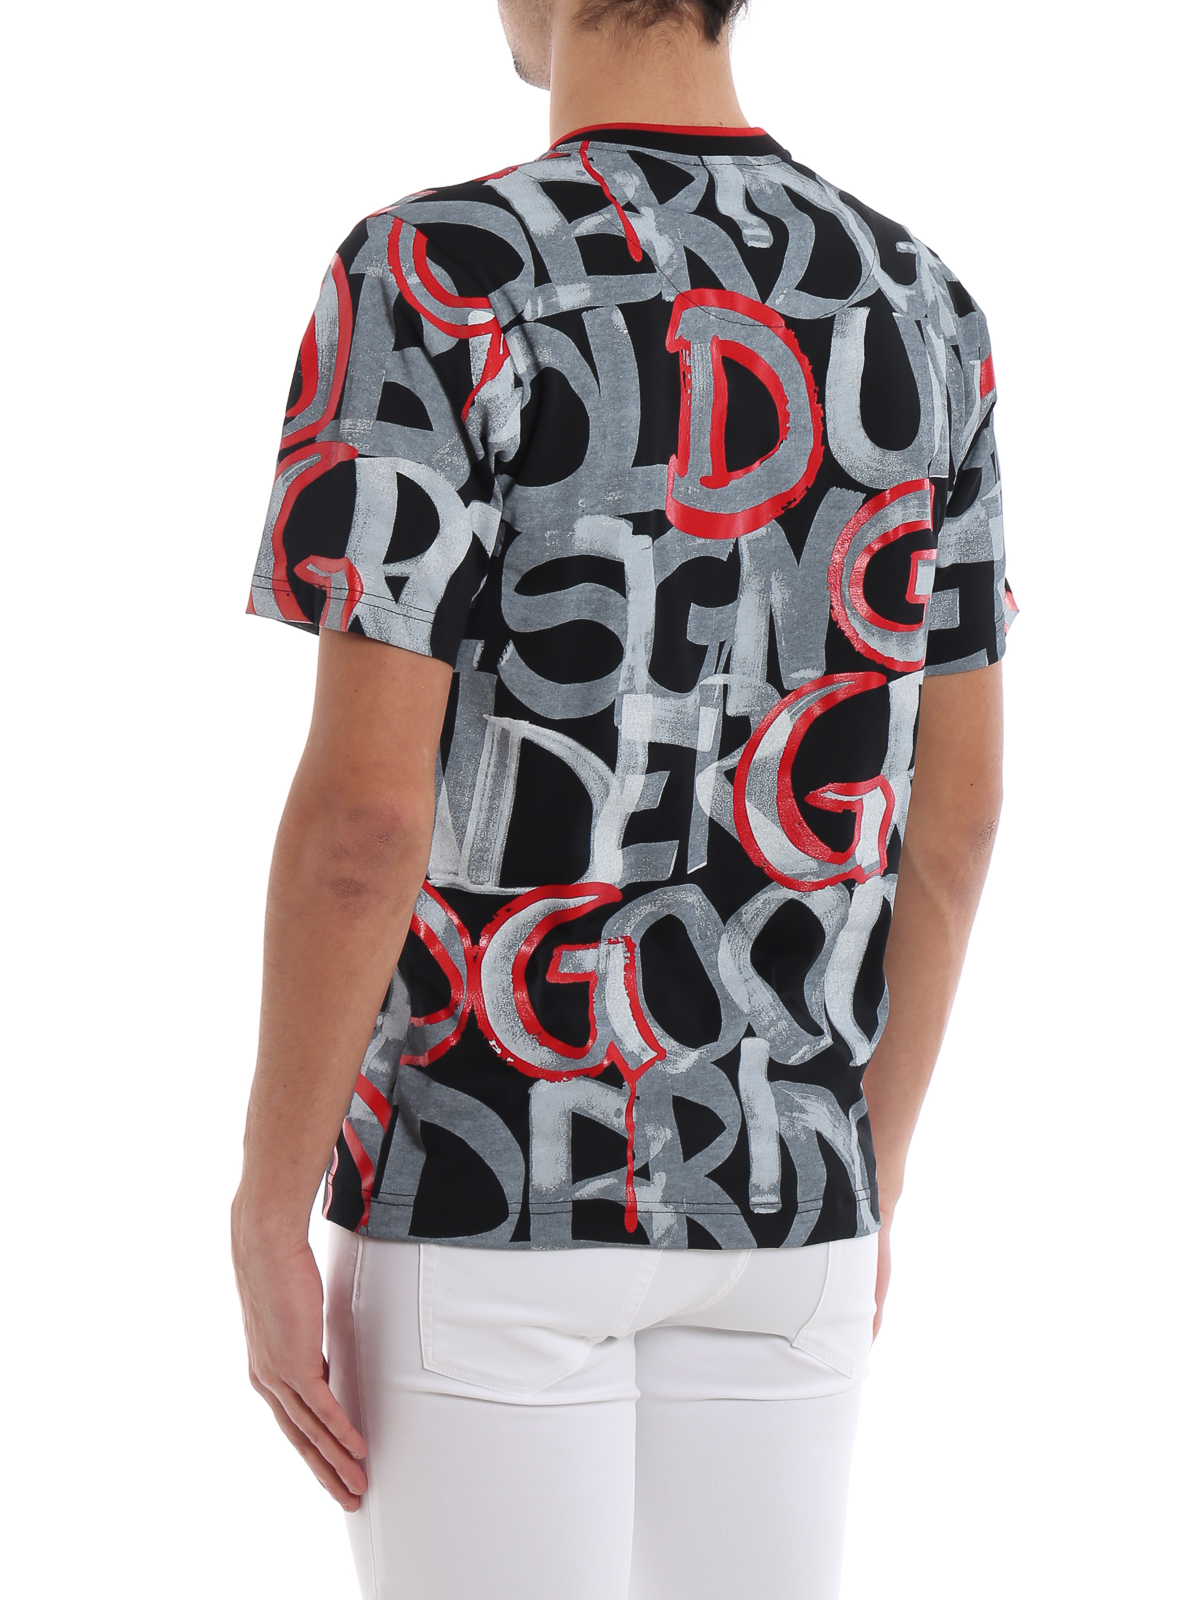 Gabbana - Graffiti print jersey T-shirt 